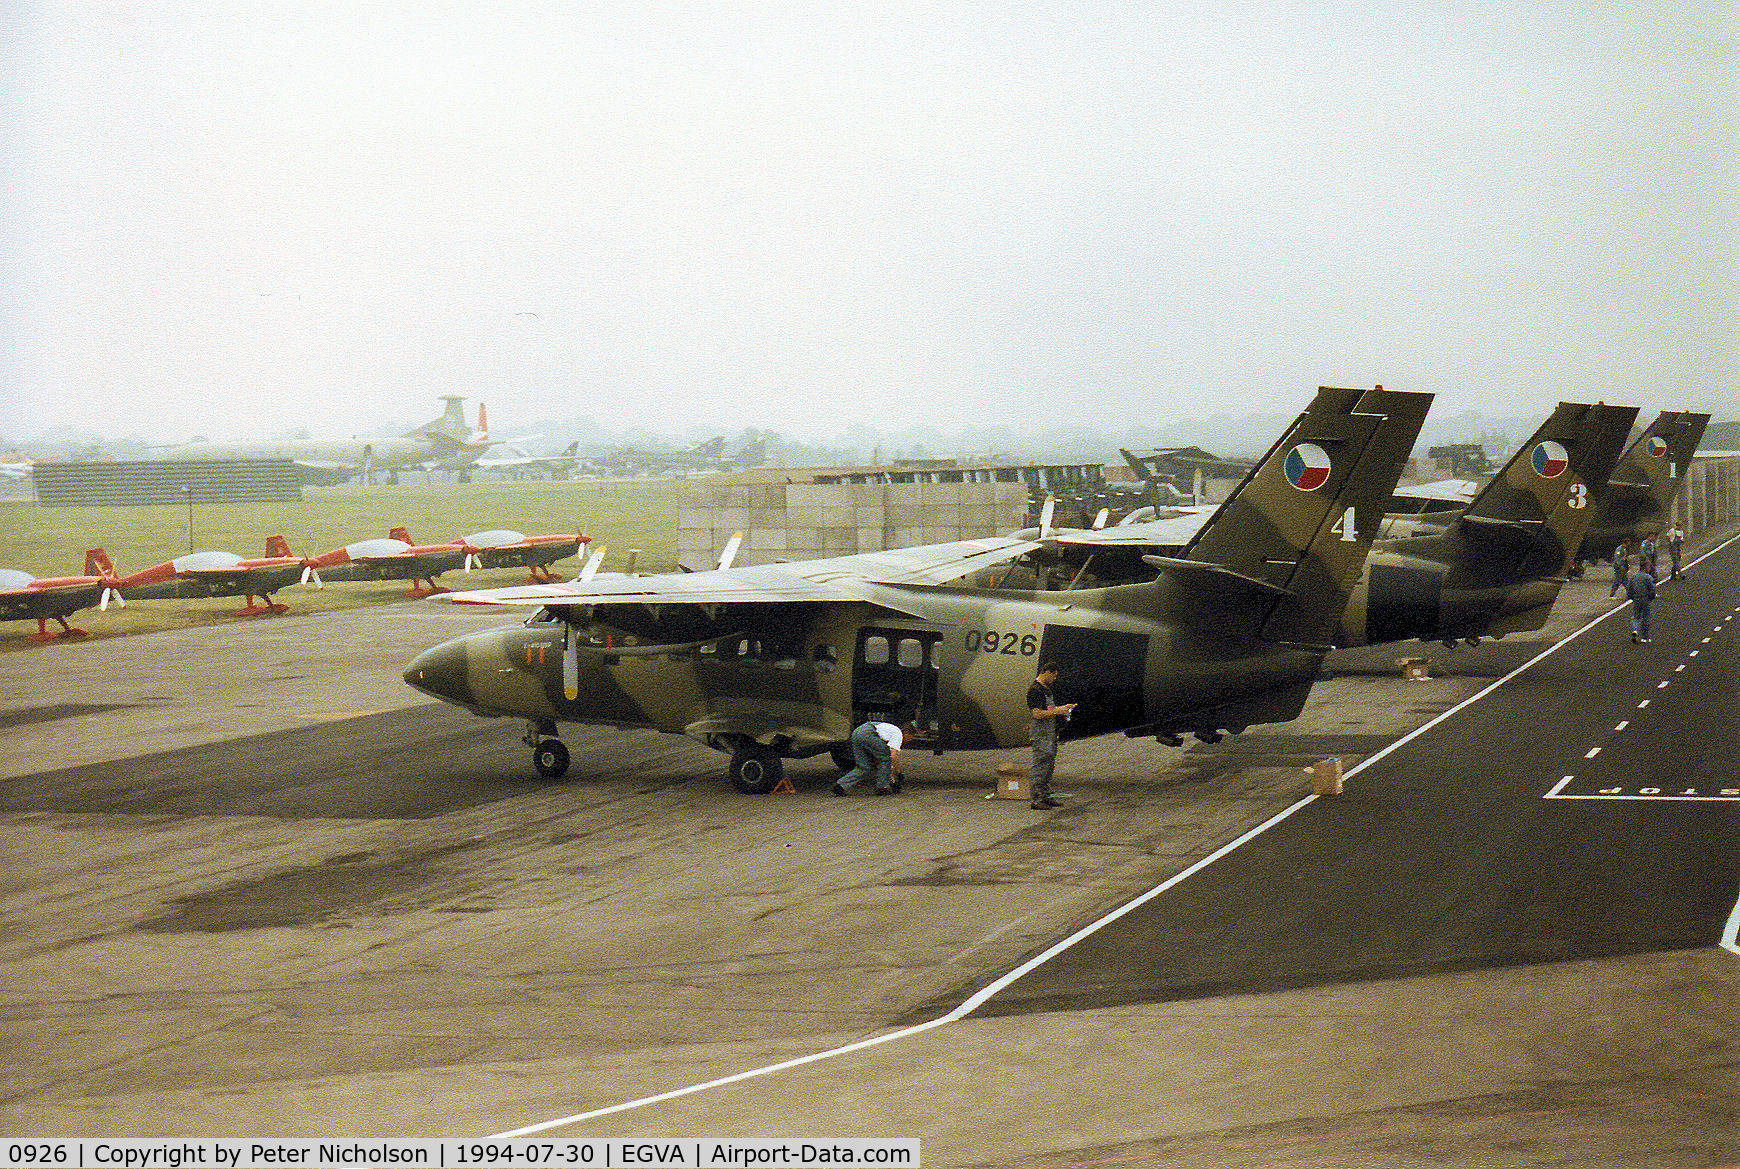 0926, 1982 Let L-410UVP Turbolet C/N 820926, L-410T Turbolet of the Czech Air Force's Szobi Kvartet on the flight-line at the 1994 Intnl Air Tattoo at RAF Fairford.